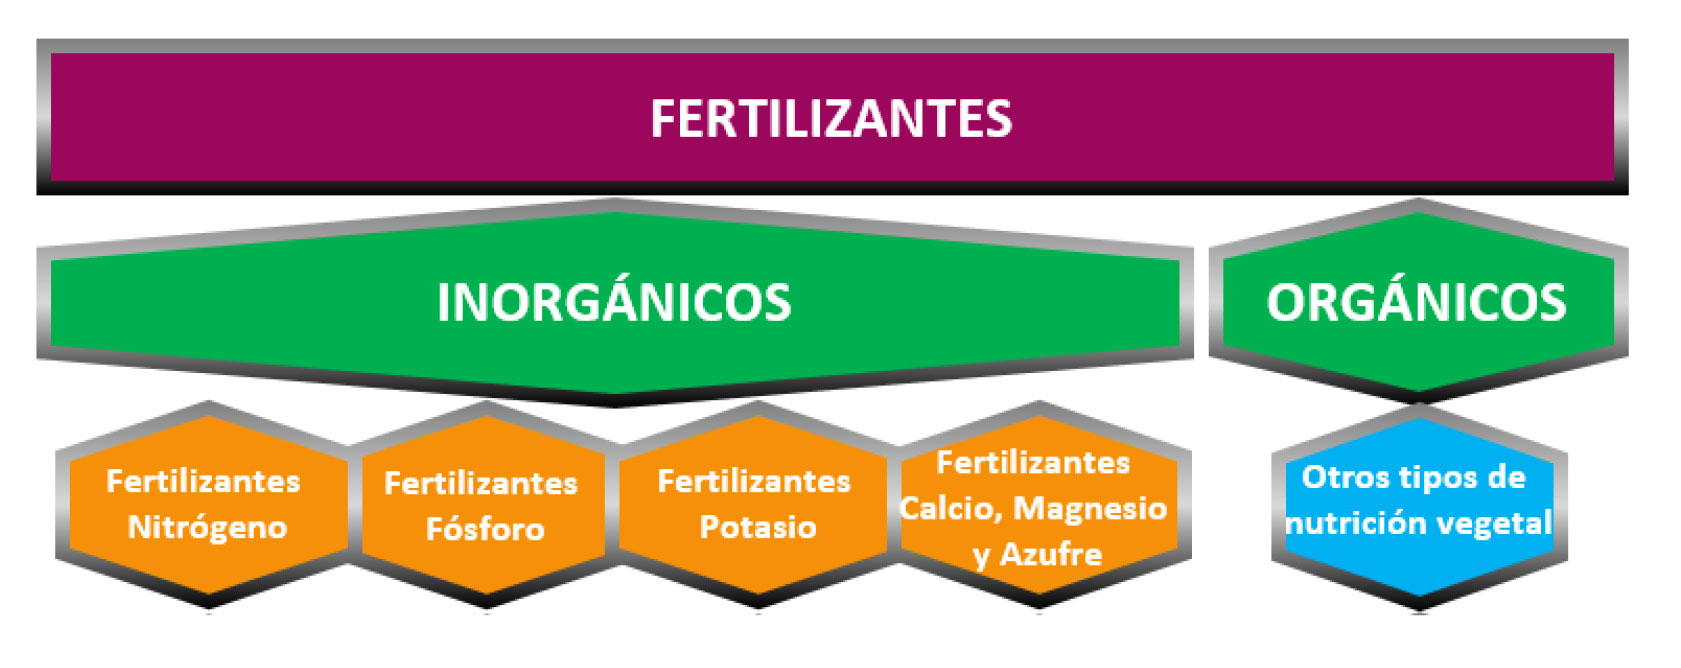 Figura 1. Tipos de fertilizantes. Fuente: Fertilizers Europe